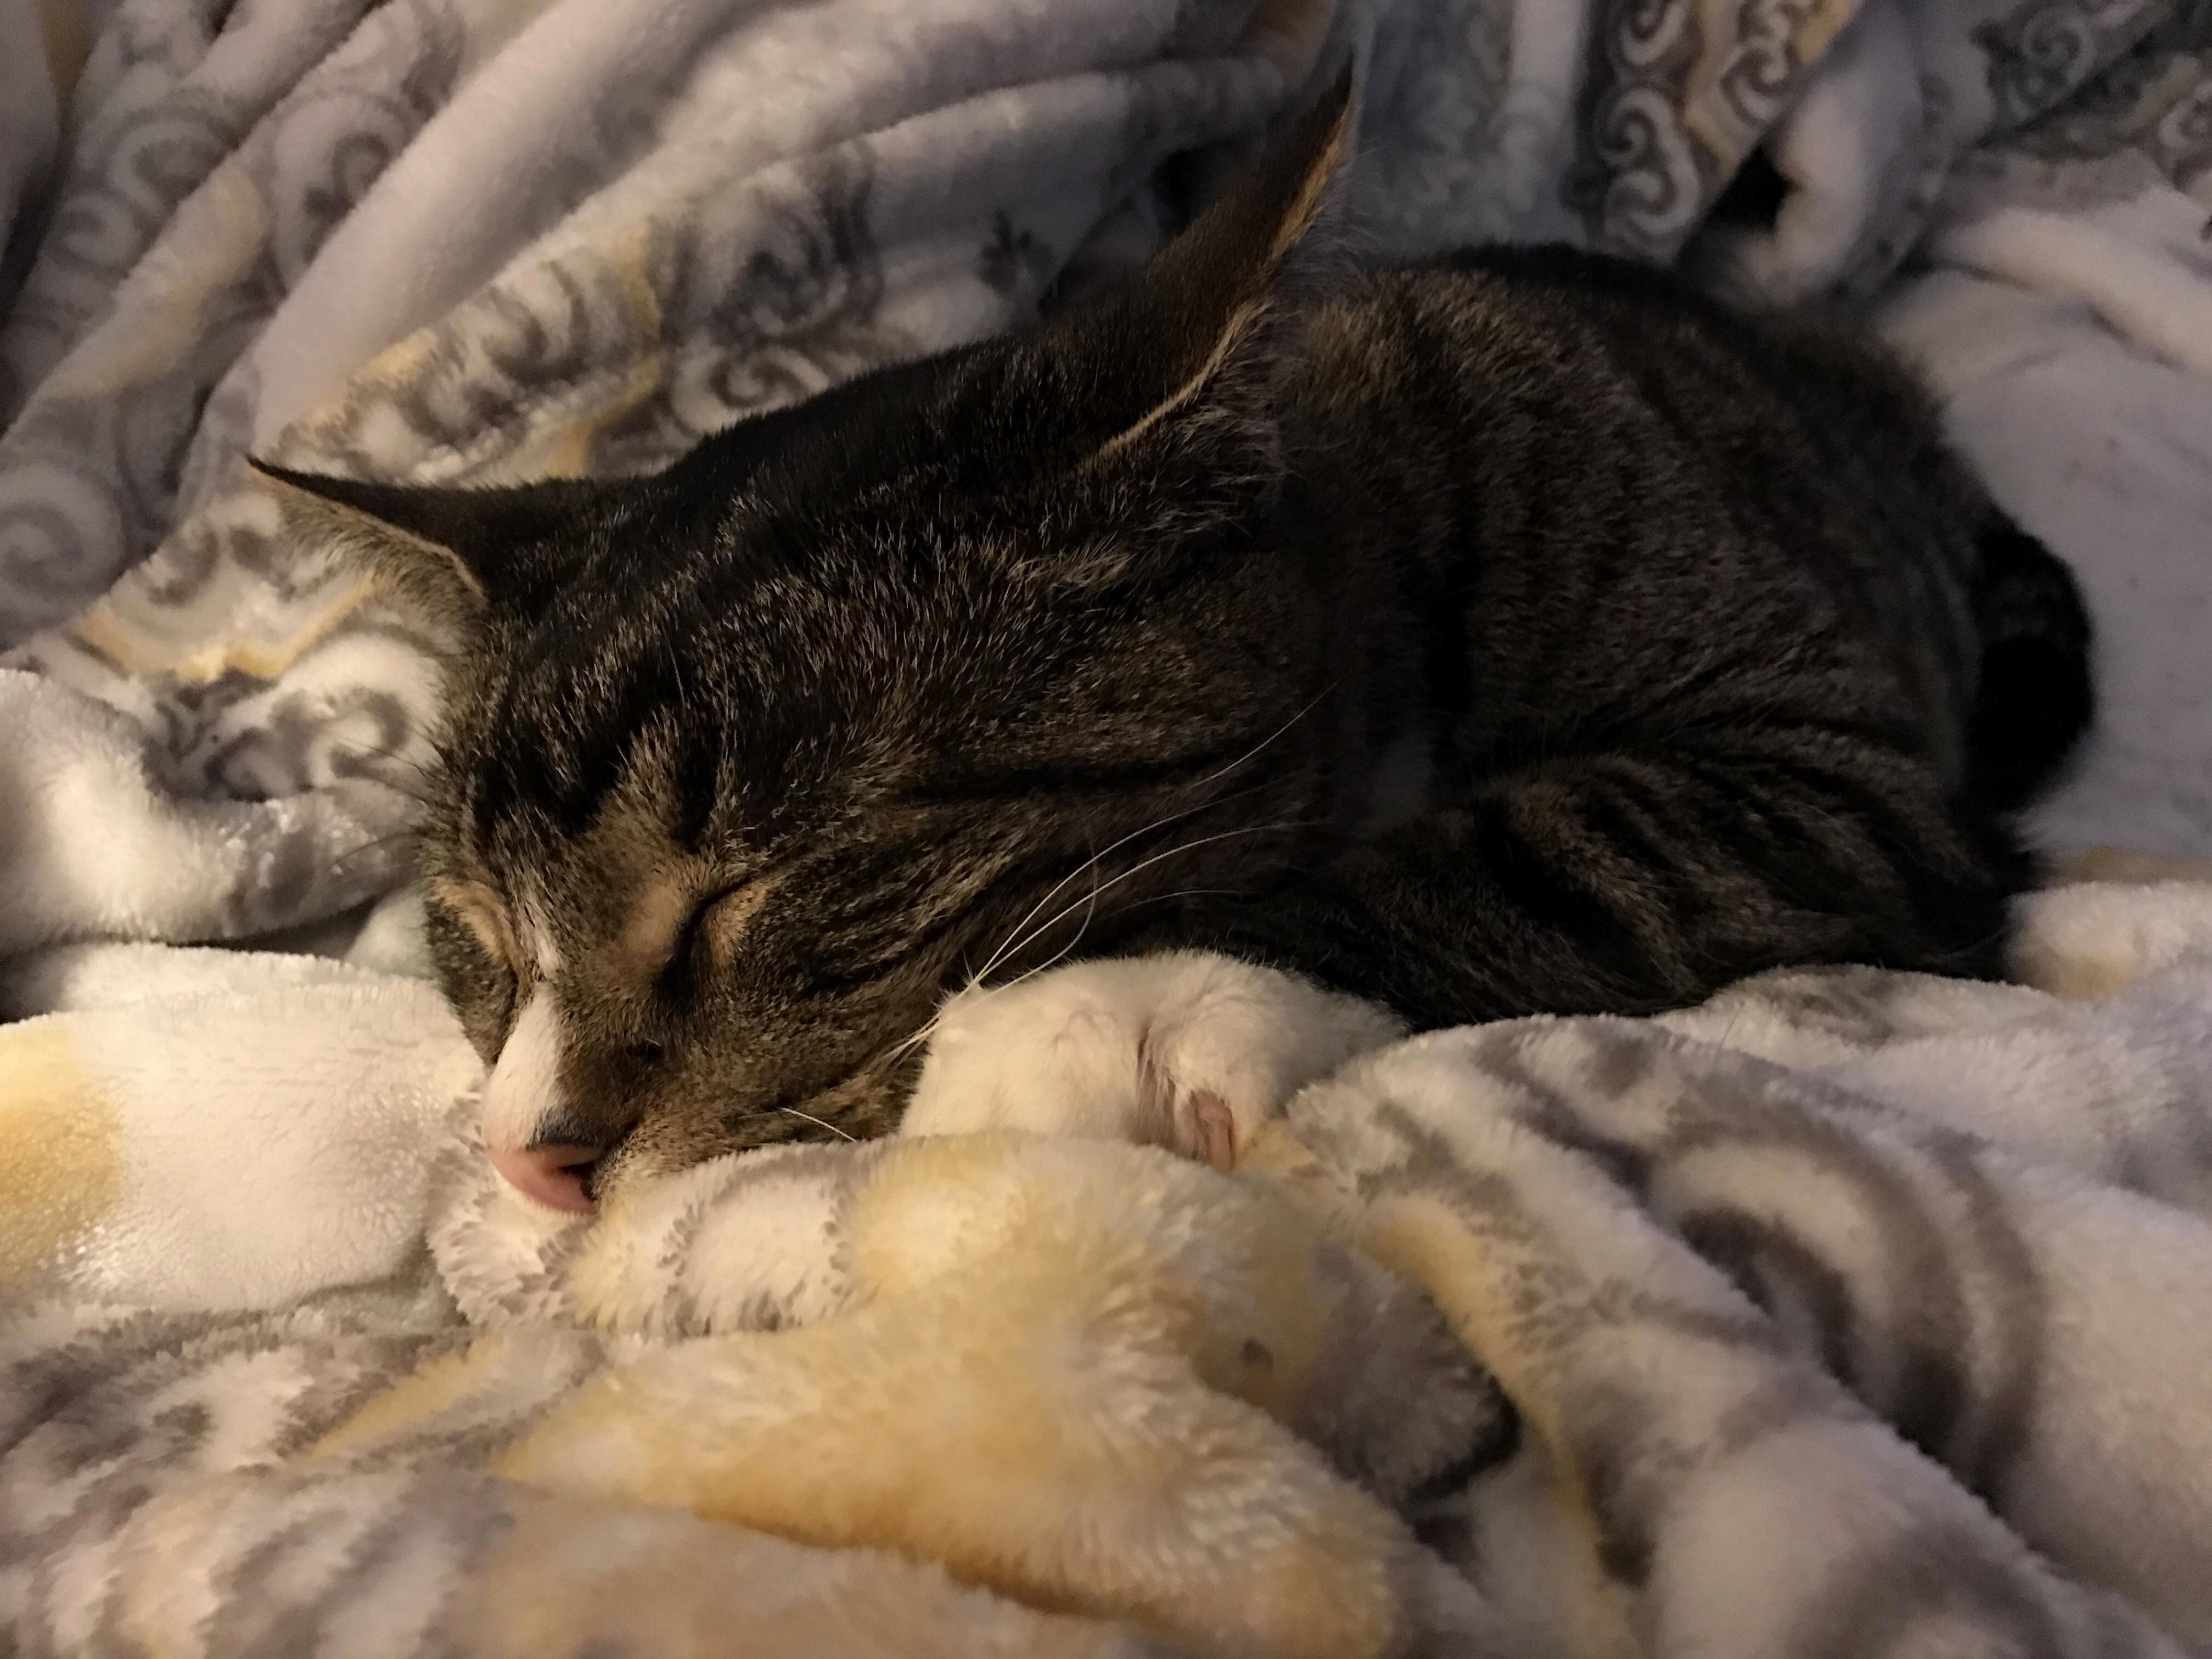 Anyone elses cat love plush blankets